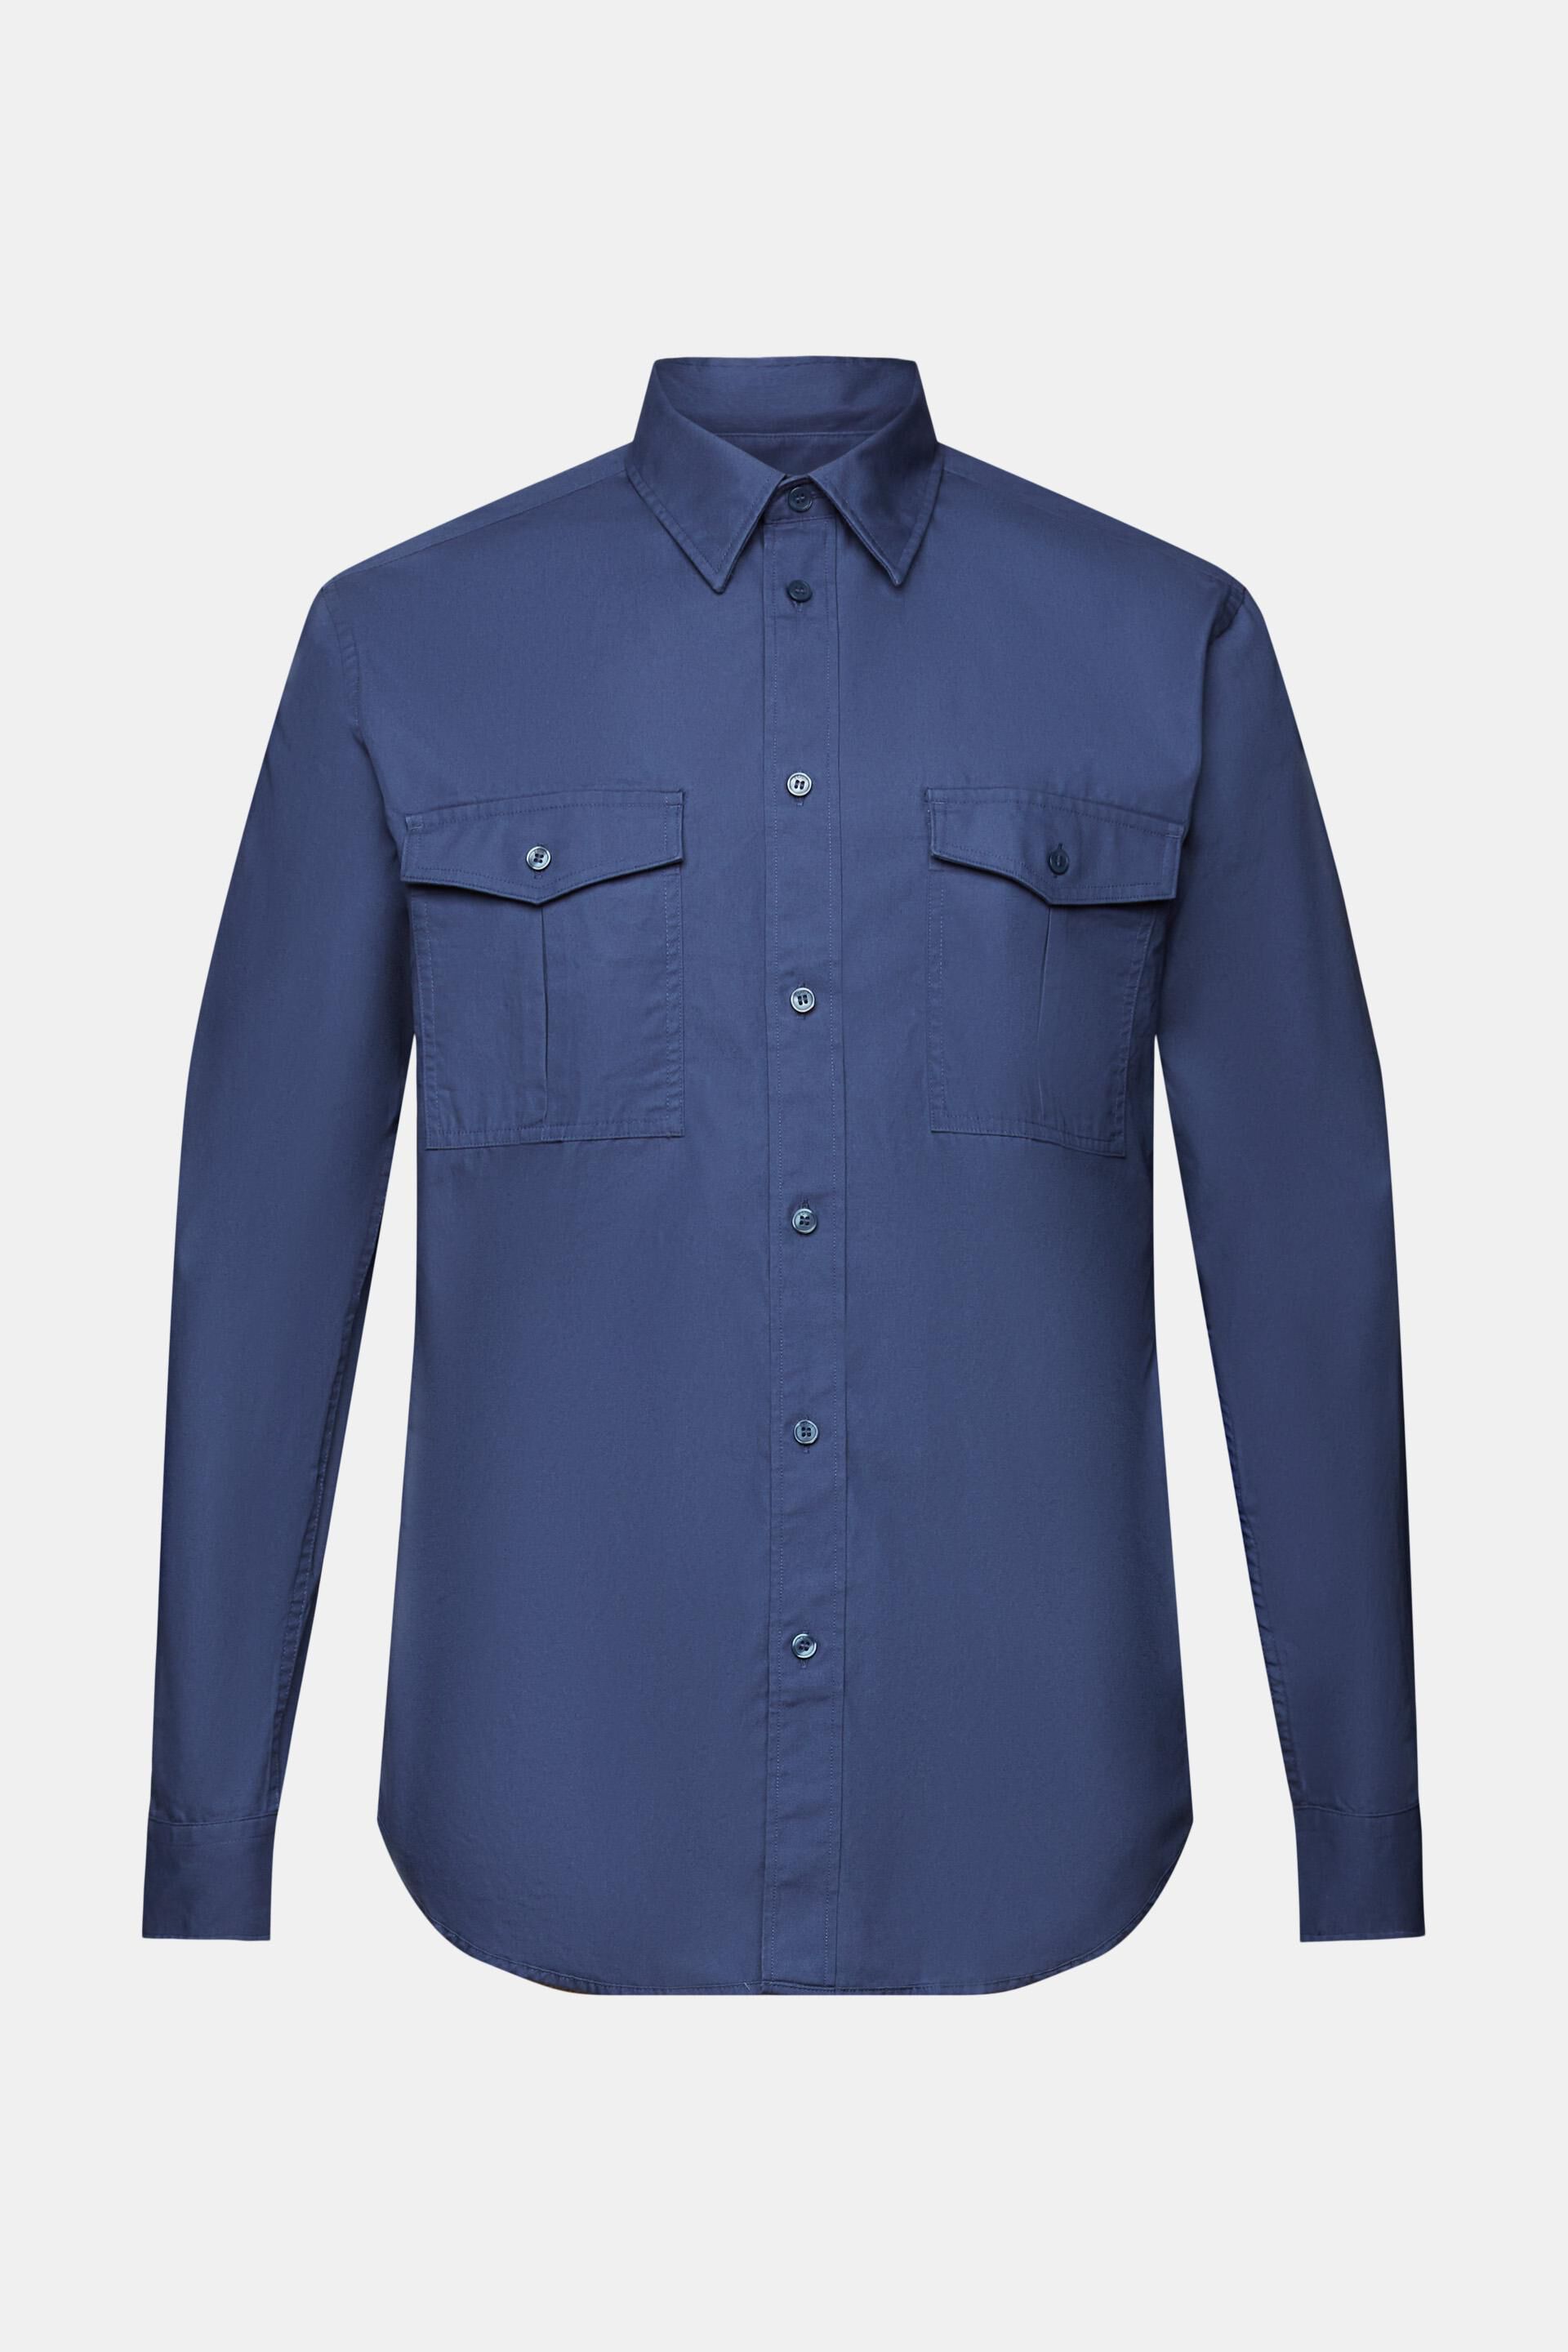 Esprit Utility-Shirt, % 100 Baumwolle